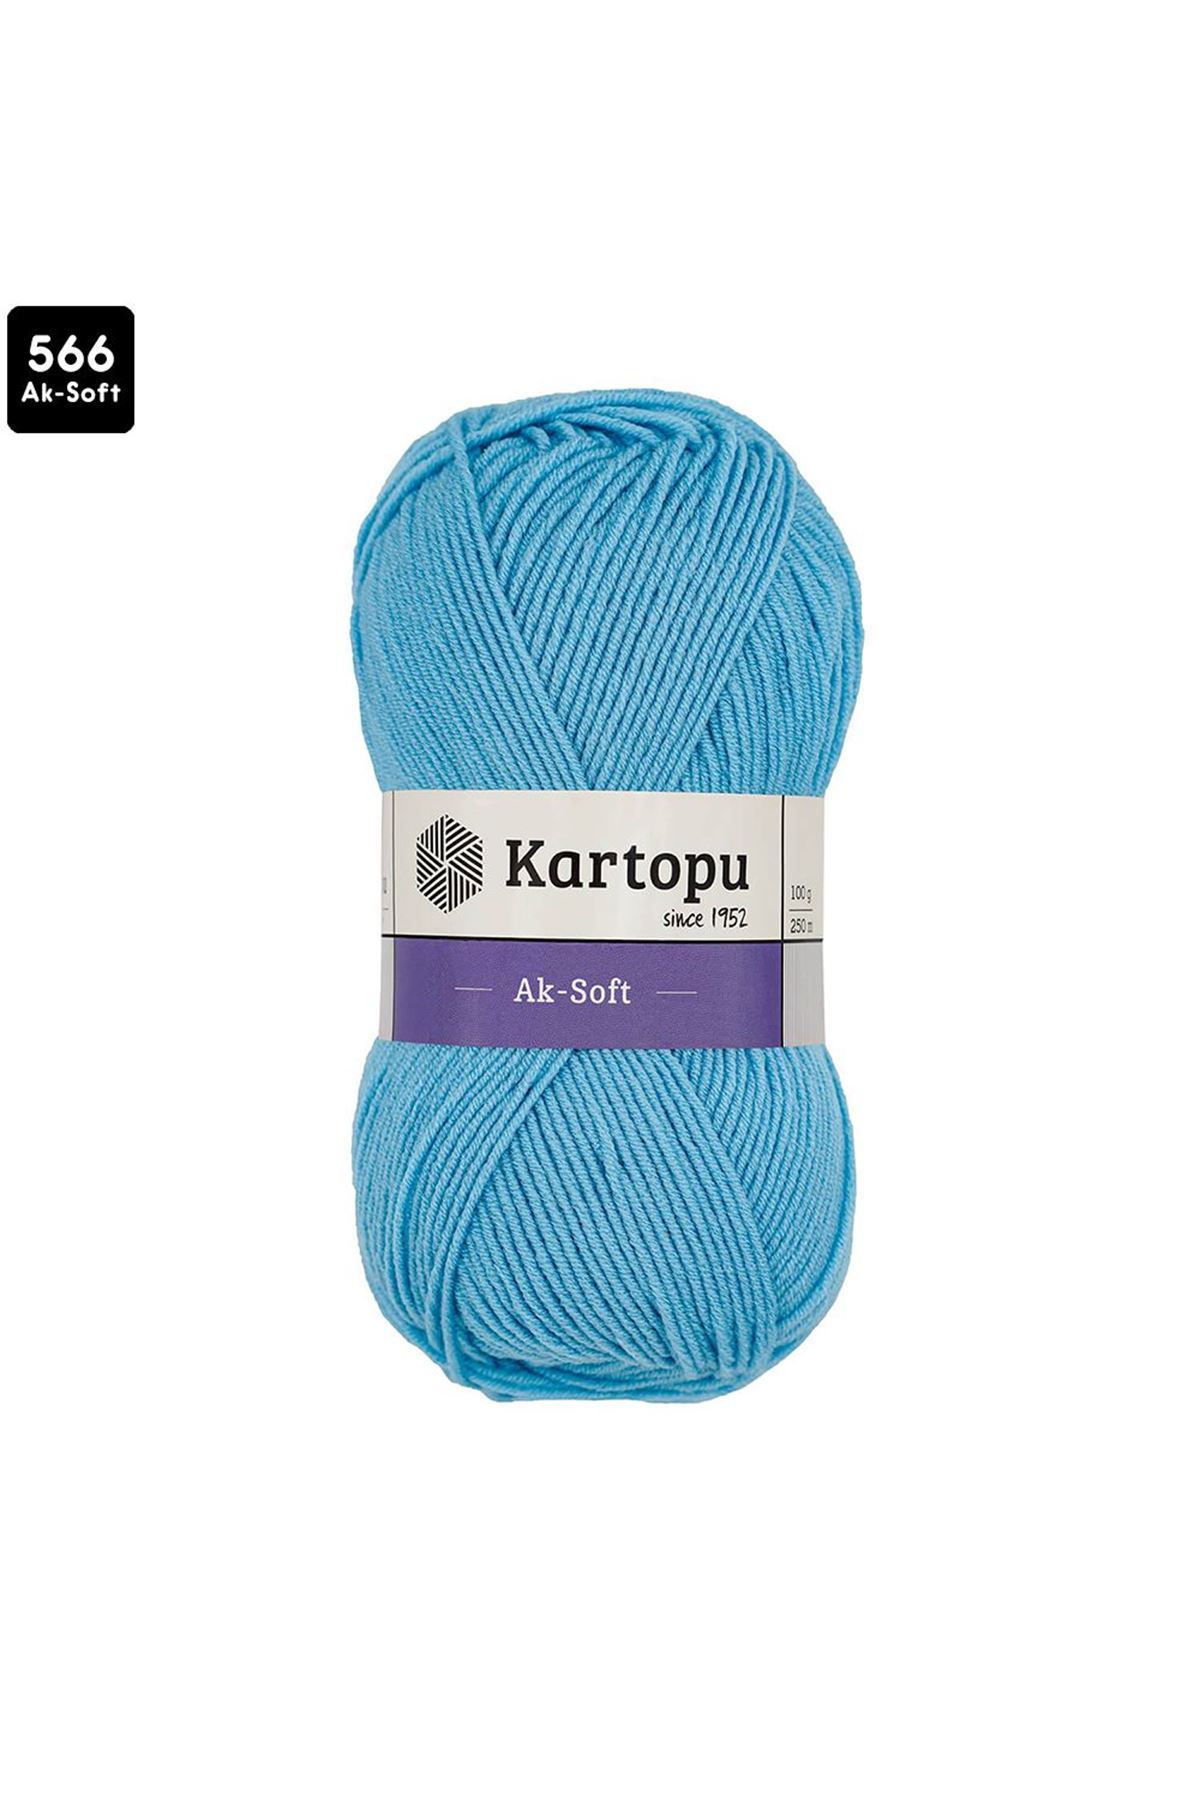 Kartopu Ak-Soft Renk No:566